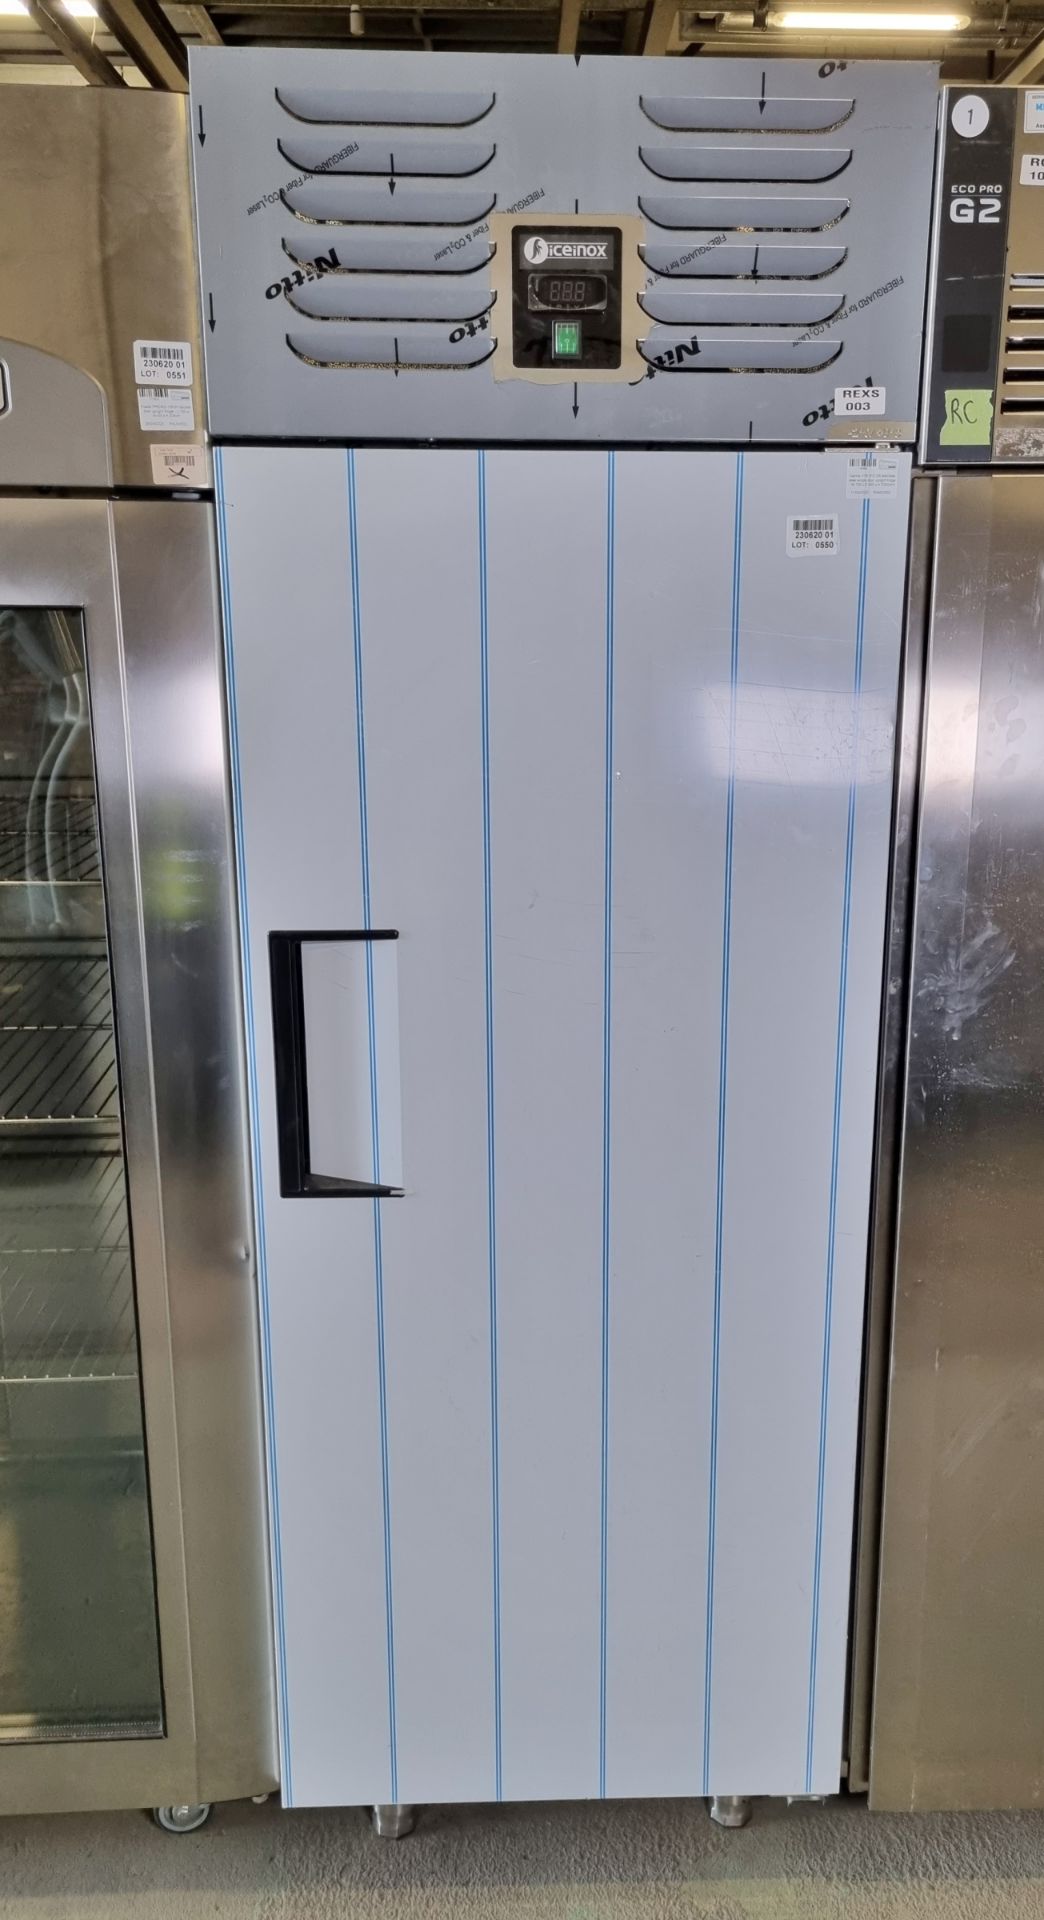 Ice Inox VTS 610 CR stainless steel single door upright fridge - W 700 x D 865 x H 2080mm